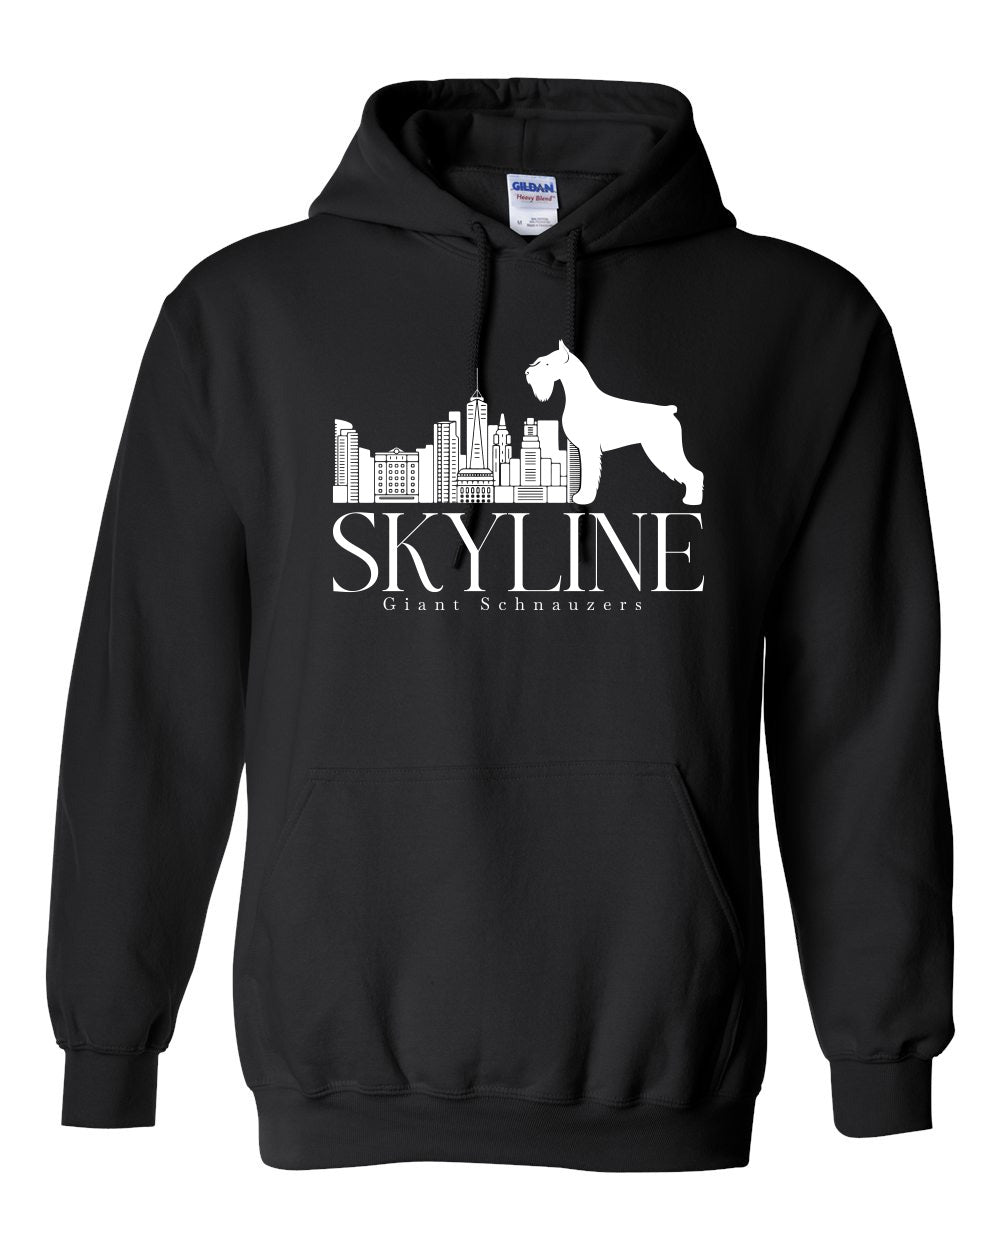 Skyline Giant Schnauzers Black Heavy Blend Hooded Sweatshirt - 18500